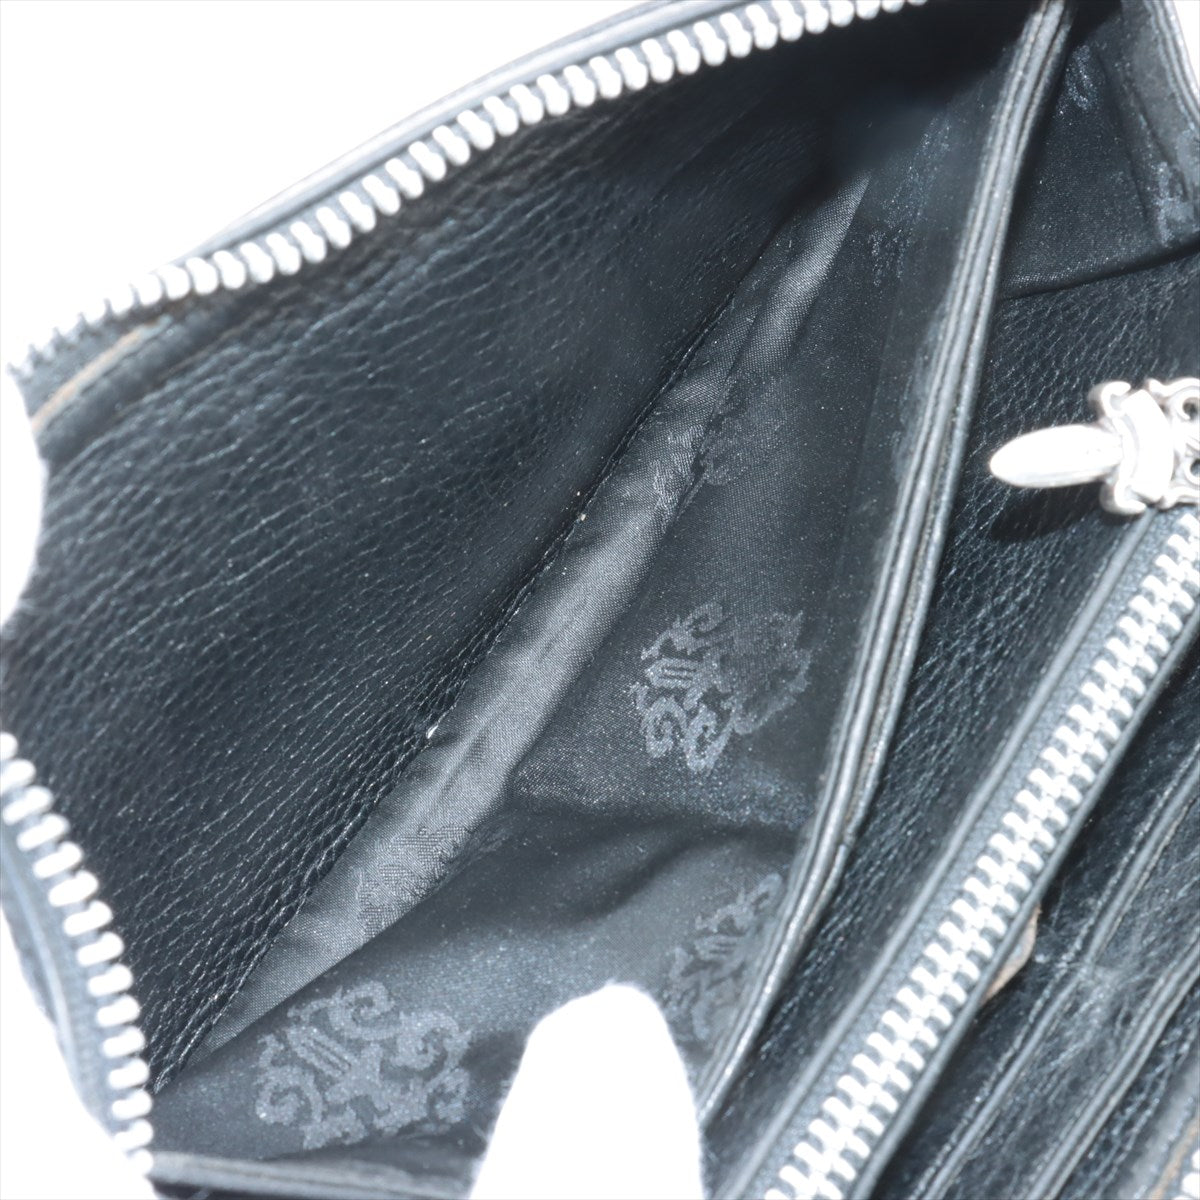 Chrome Hearts REC F ZIP Wallet Leather & 925 Black Dagger zip